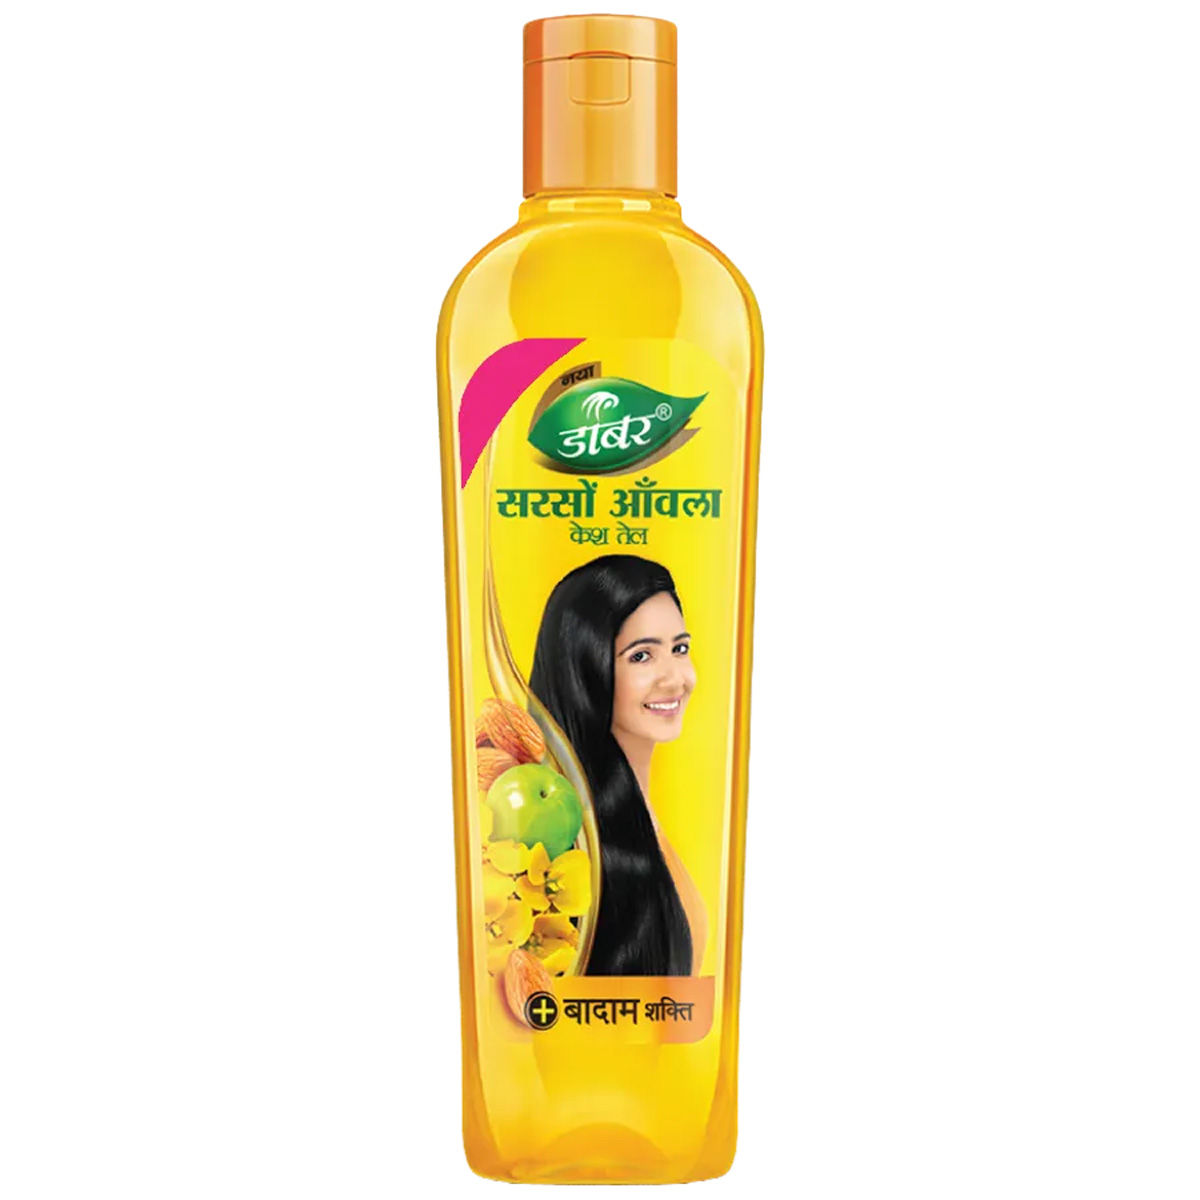 Dabur Almond Hair Oil, 200 ml Price, Uses, Side Effects, Composition -  Apollo Pharmacy